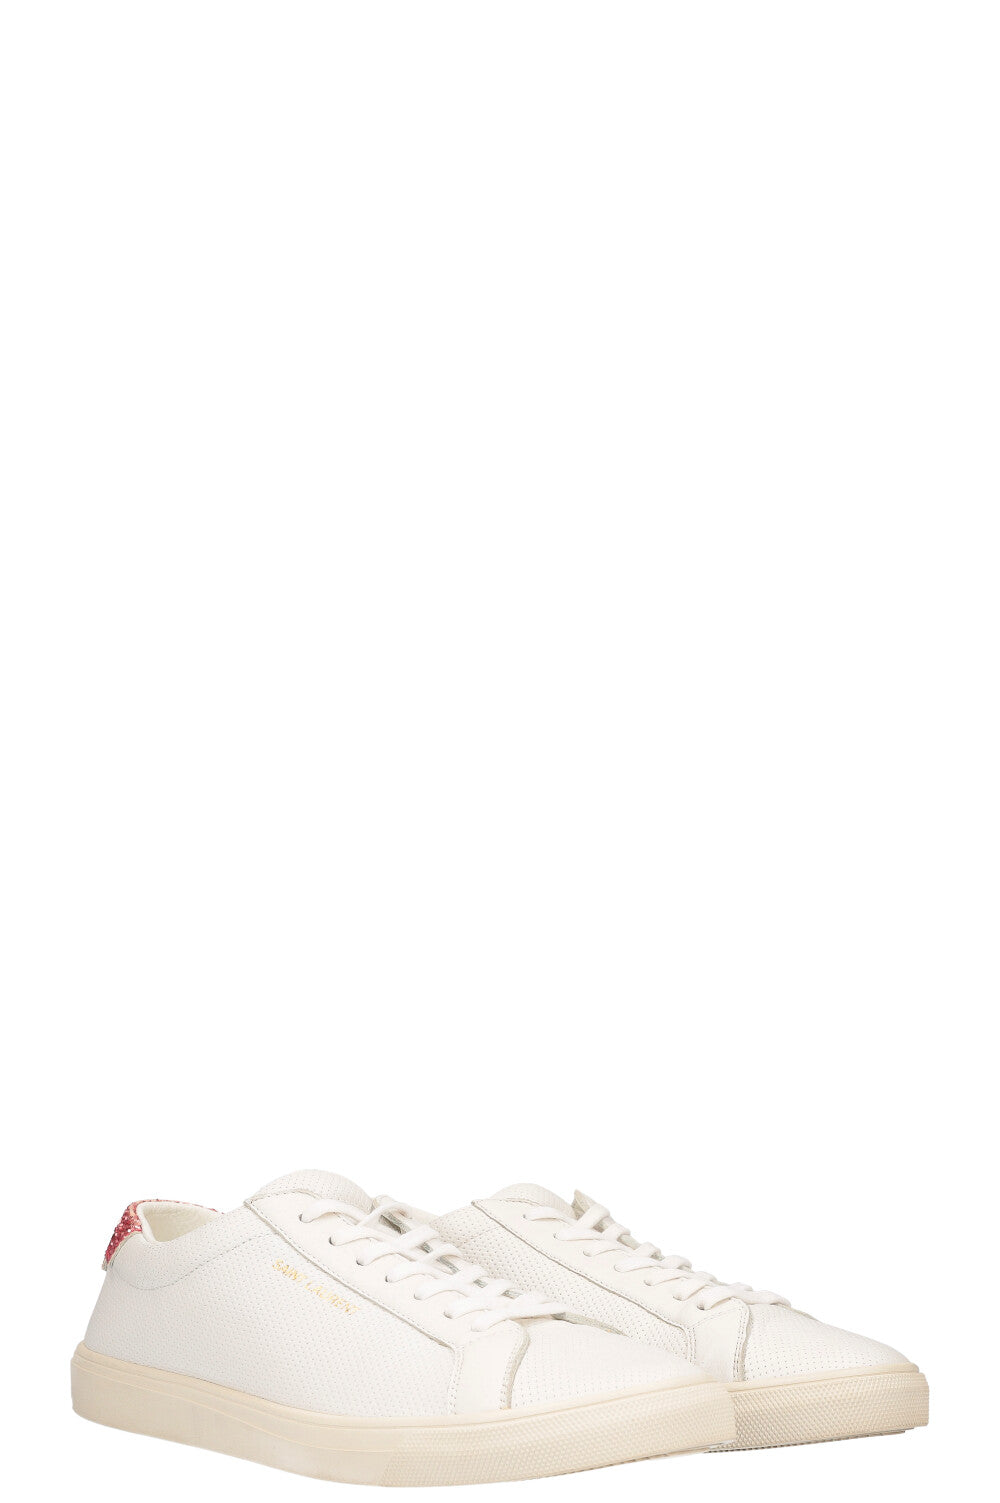 Saint Laurent Court Sneakers White Pink